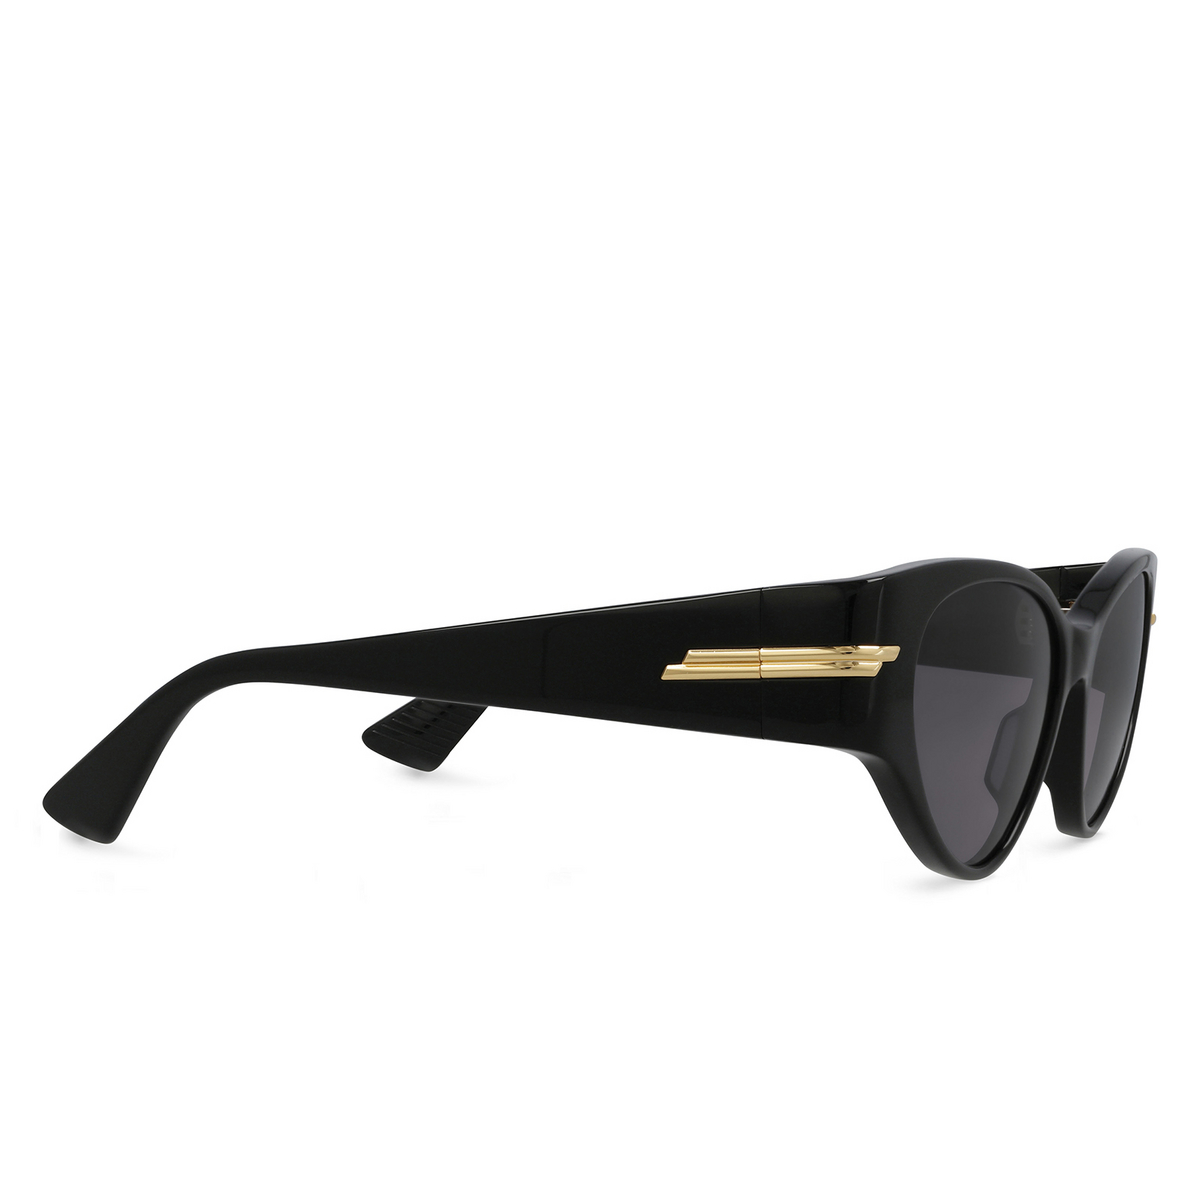 Bottega Veneta® Sunglasses: BV1002S color Black 001 - front view.